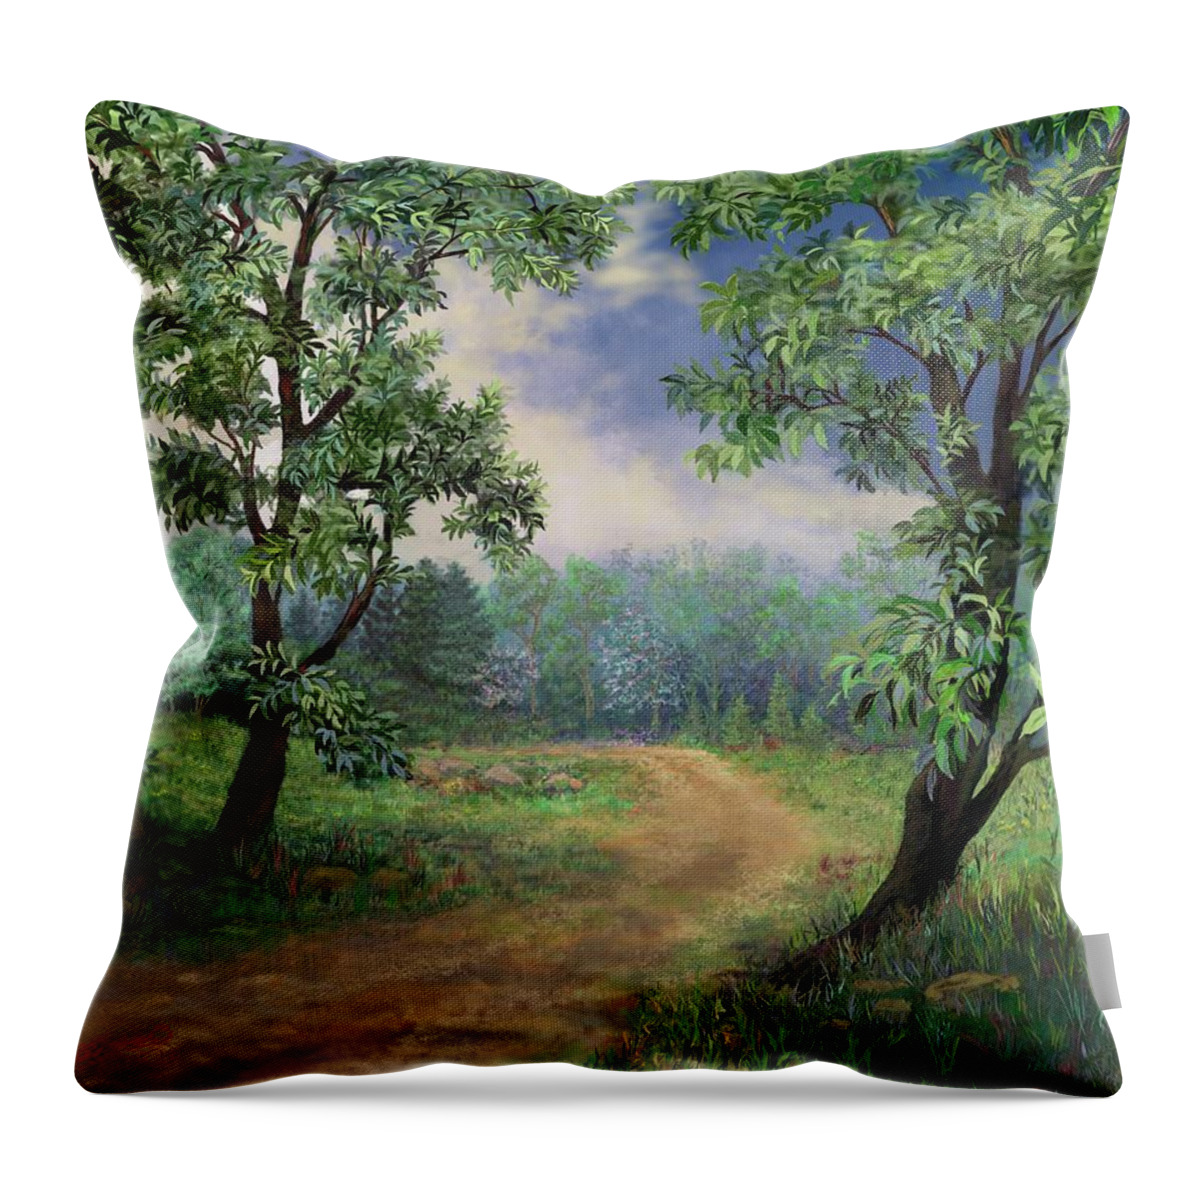 Arkansas Throw Pillow featuring the digital art Arkansas Country Road by Marilyn Cullingford